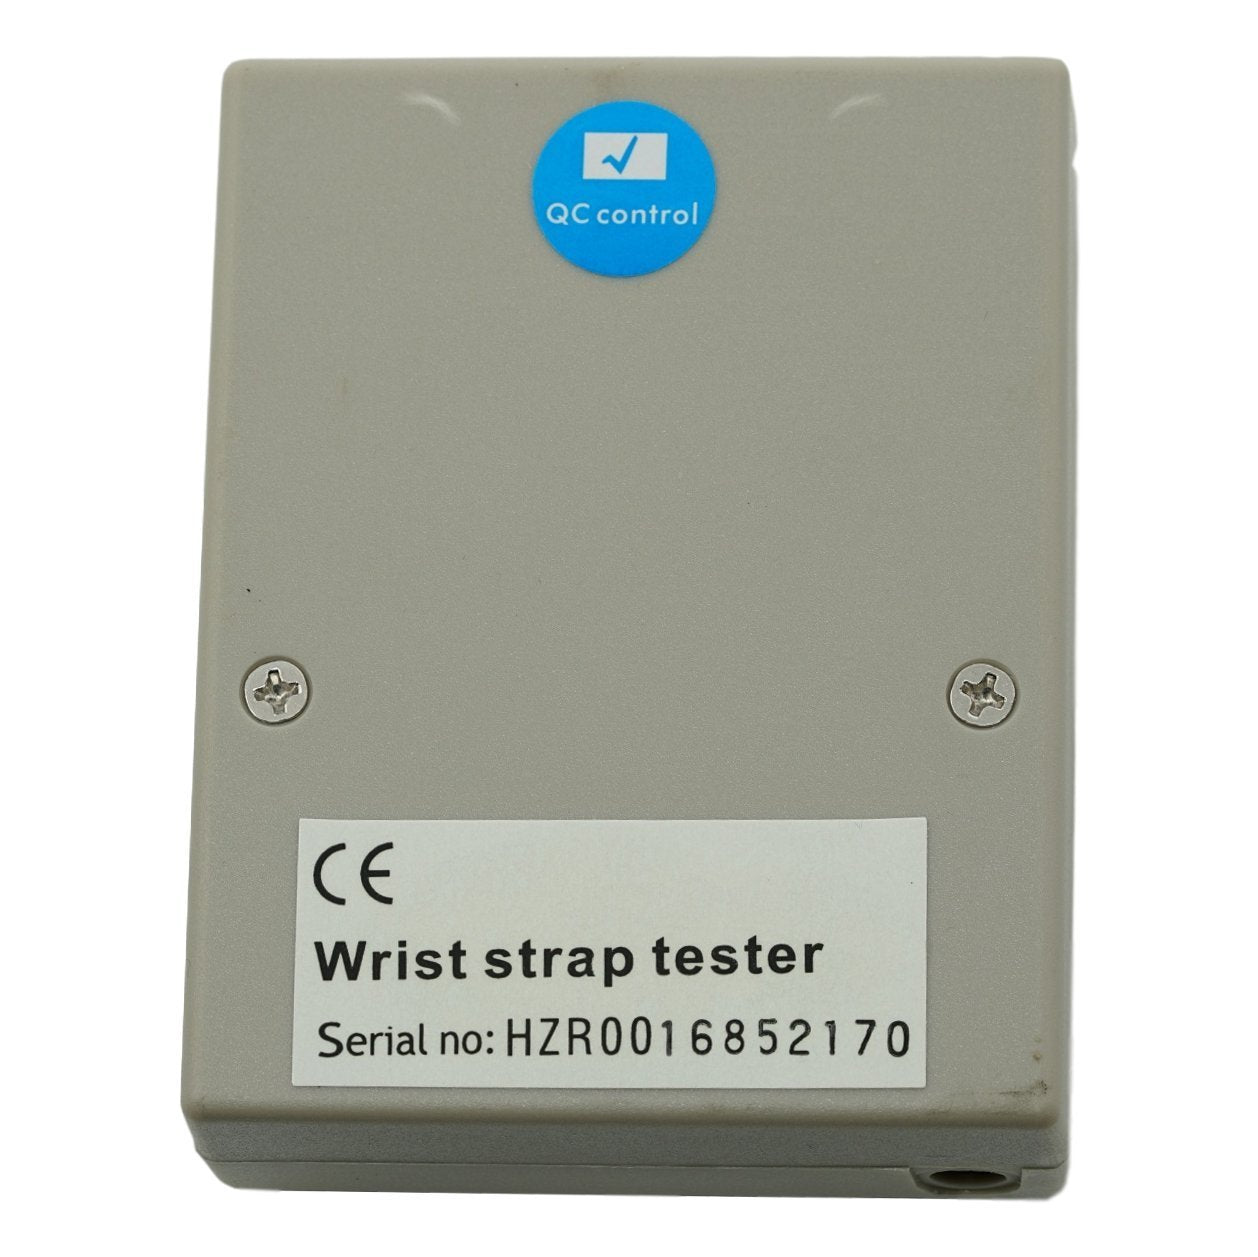 Valtcan Ground Wrist Strap Tester Anti-Static ESD